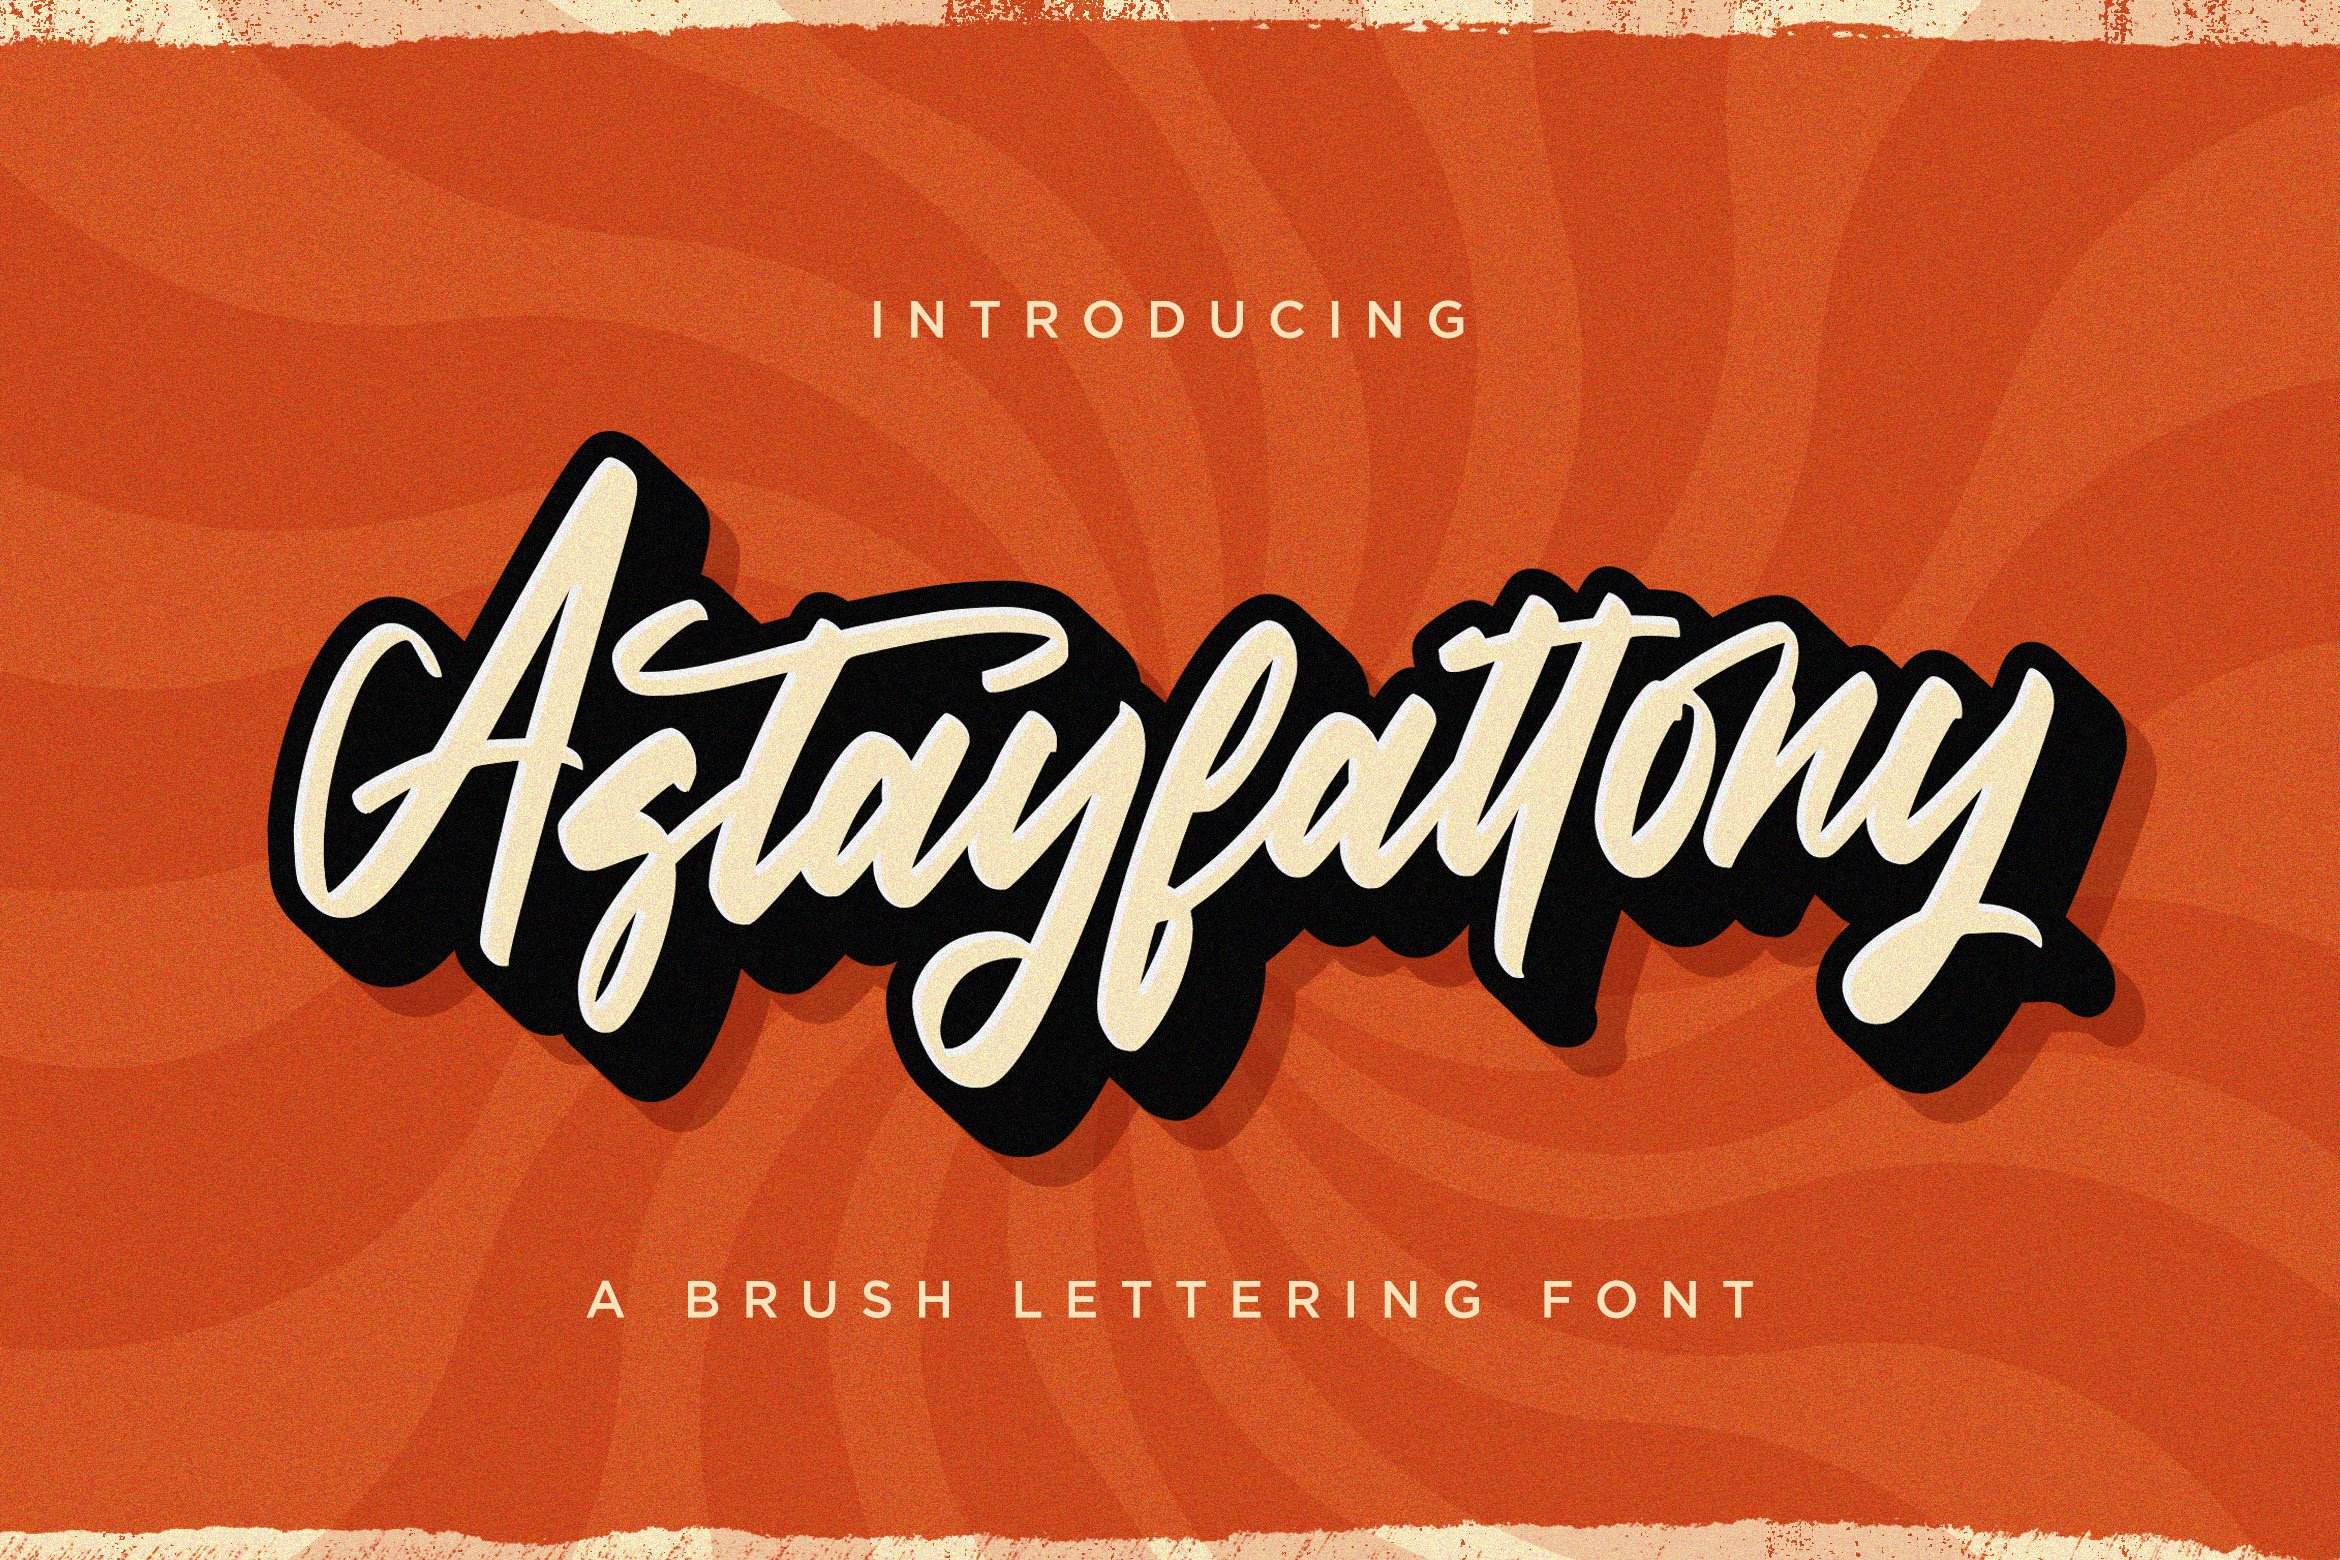 Astayfattony - Handwritten Font cover image.